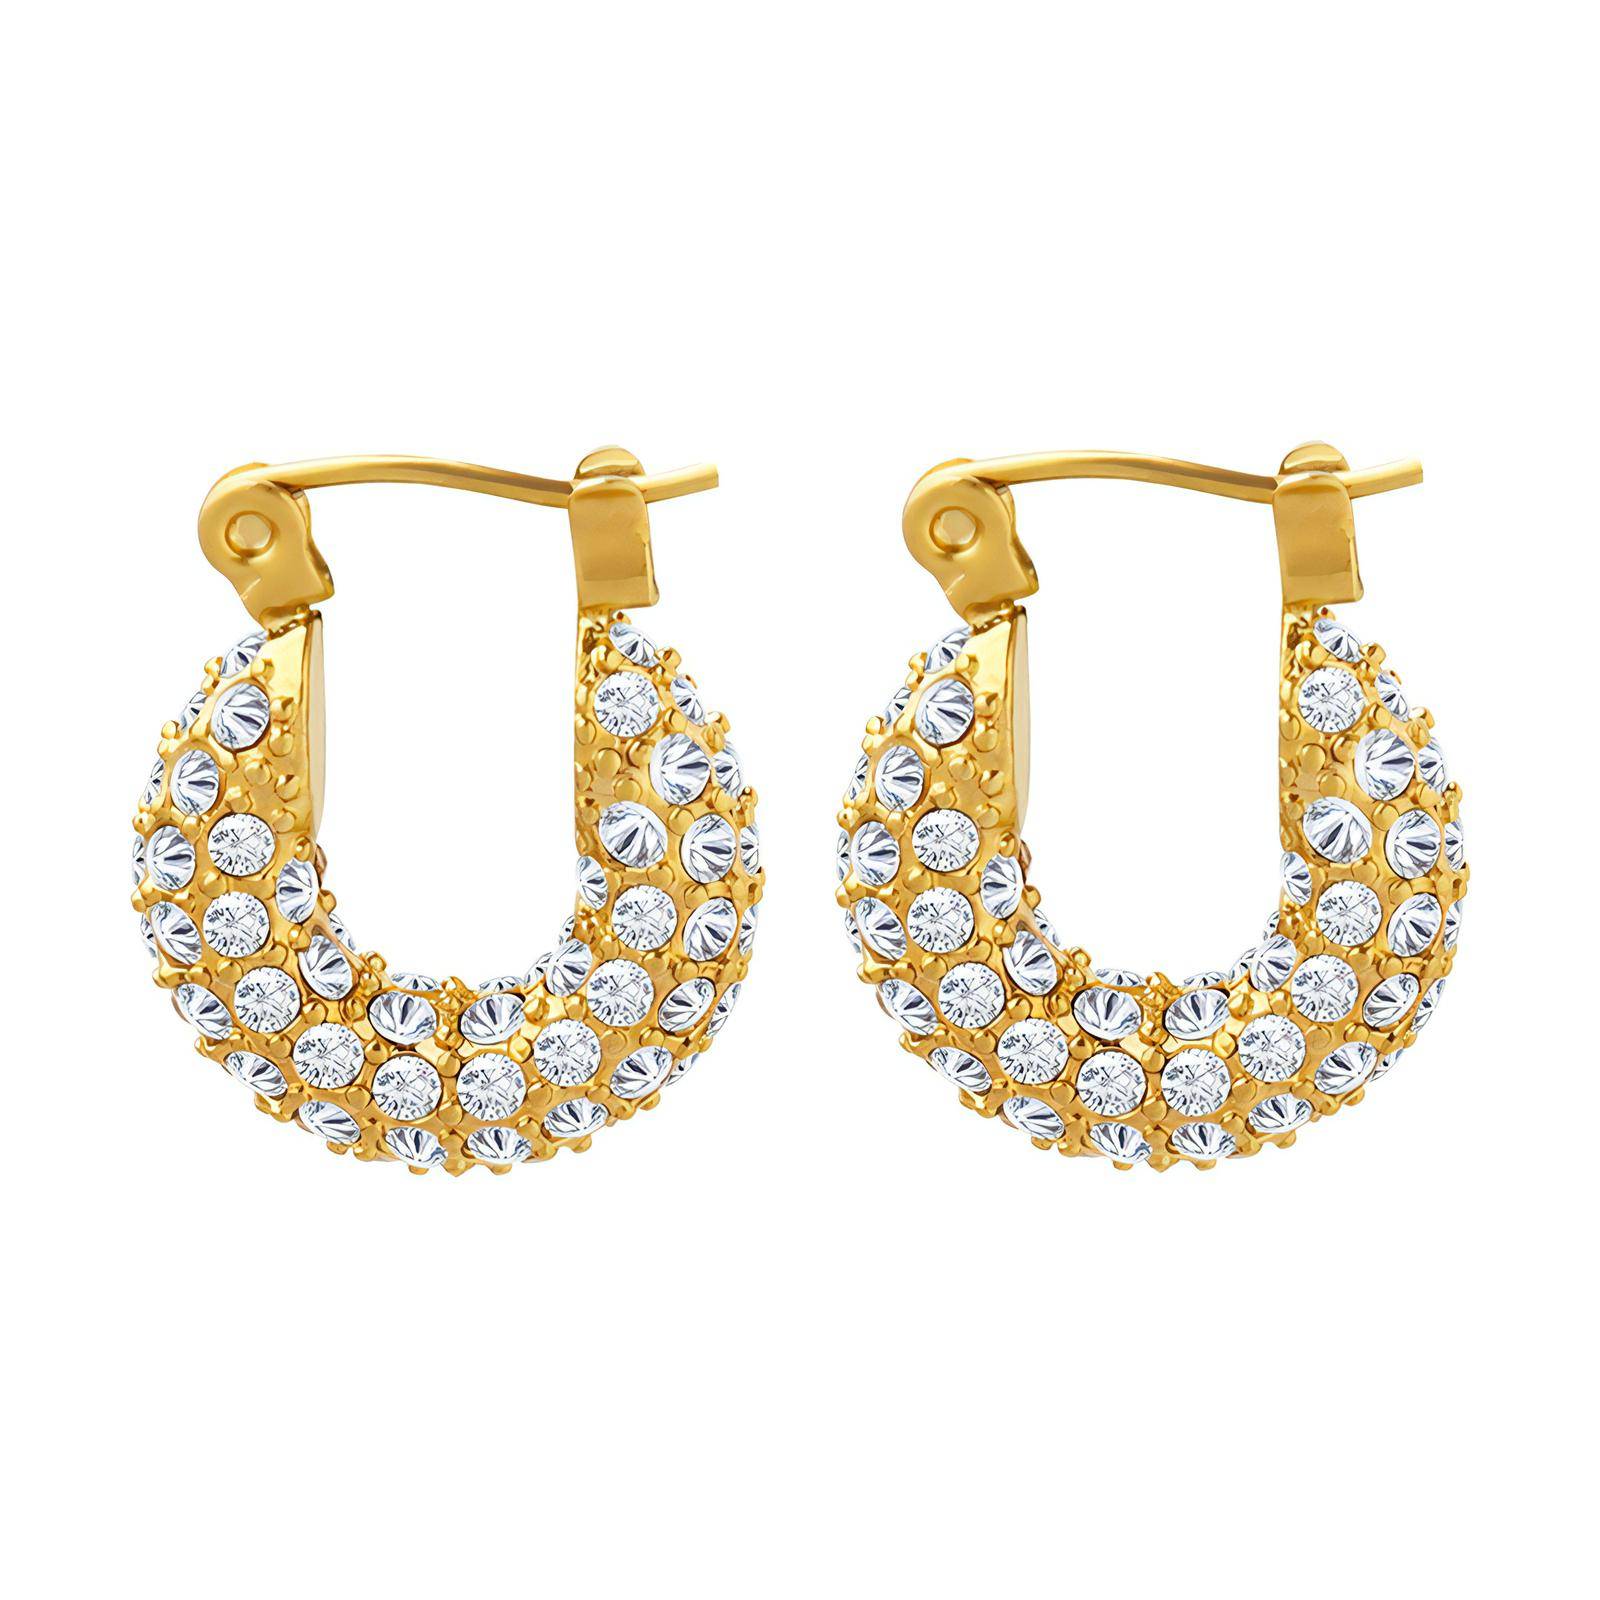 18K gold plated Stainless steel earrings, Intensity SKU #84939-4 ...